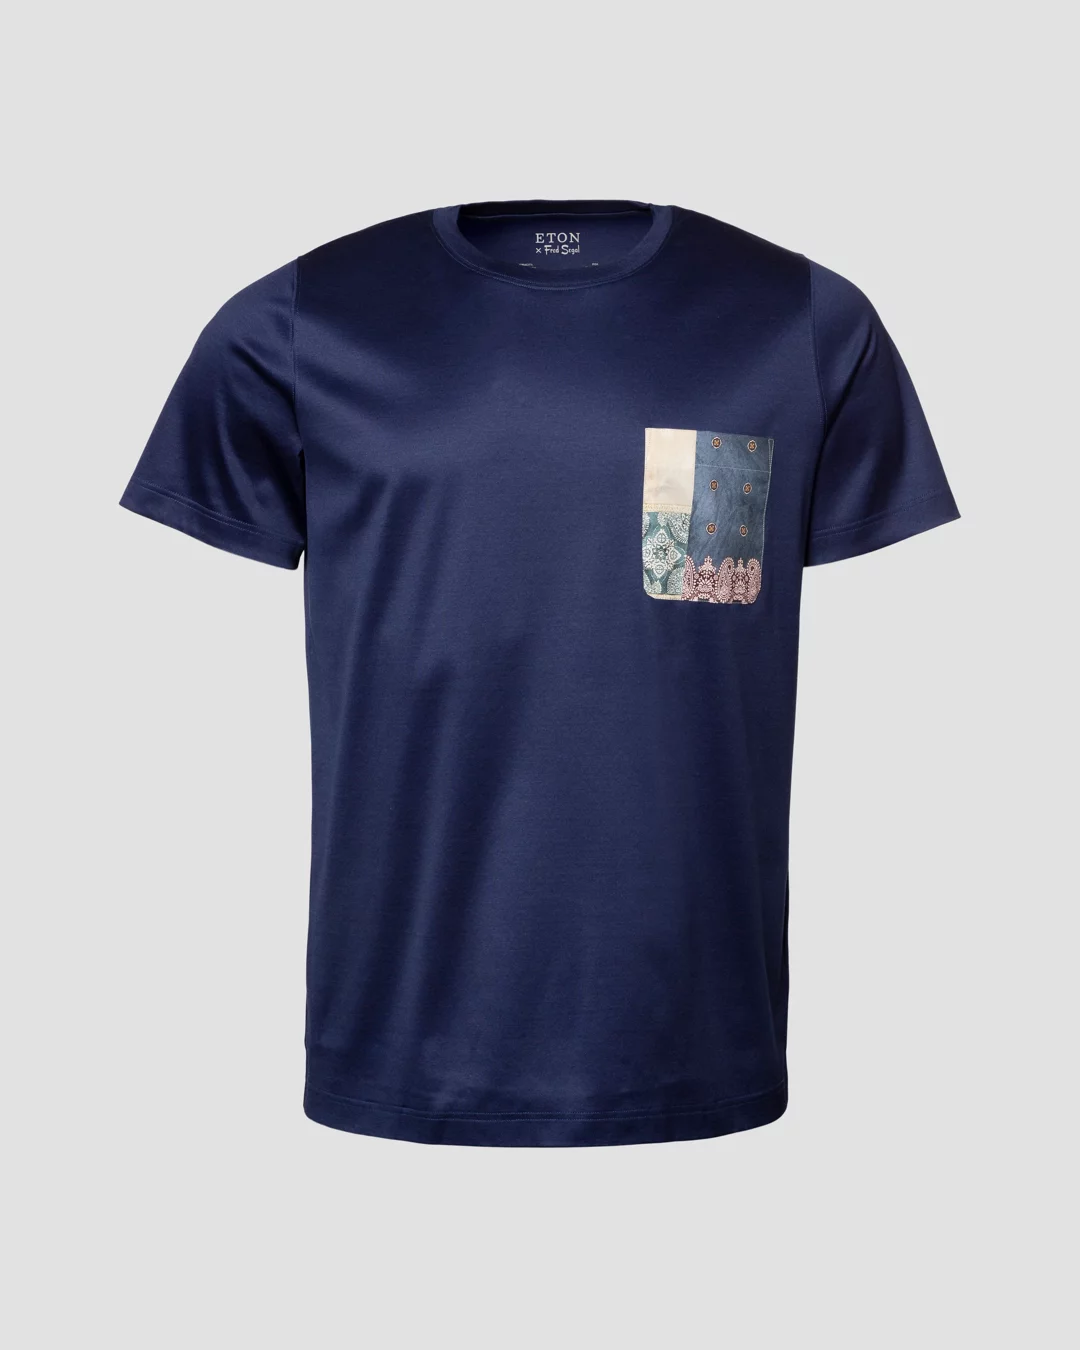 Navy Special Edition Filo di Scozia T-Shirt - Eton